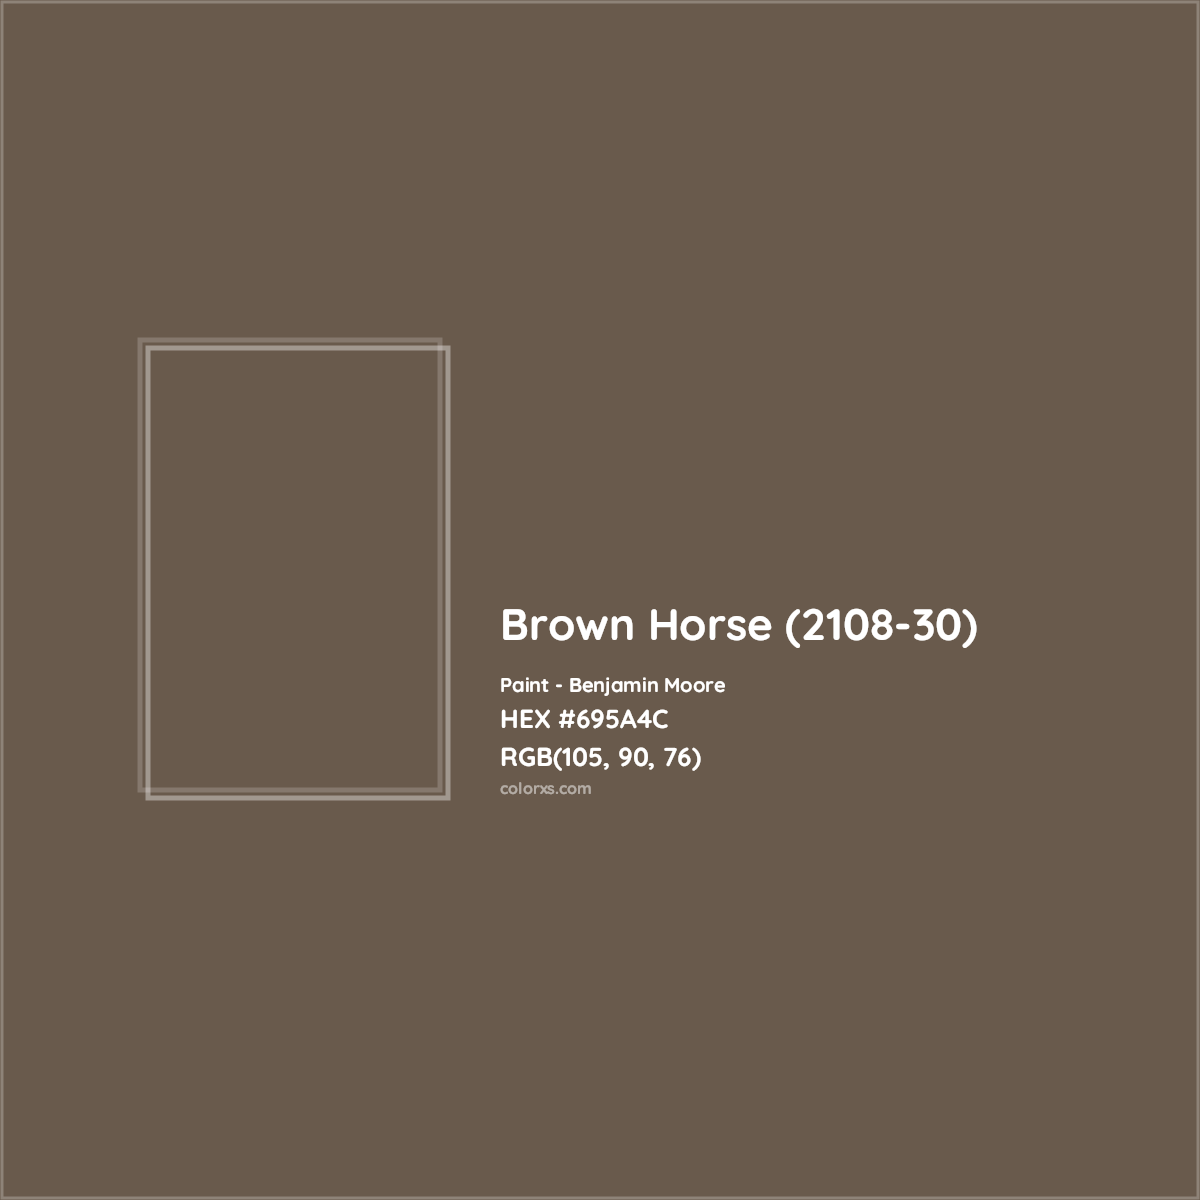 HEX #695A4C Brown Horse (2108-30) Paint Benjamin Moore - Color Code